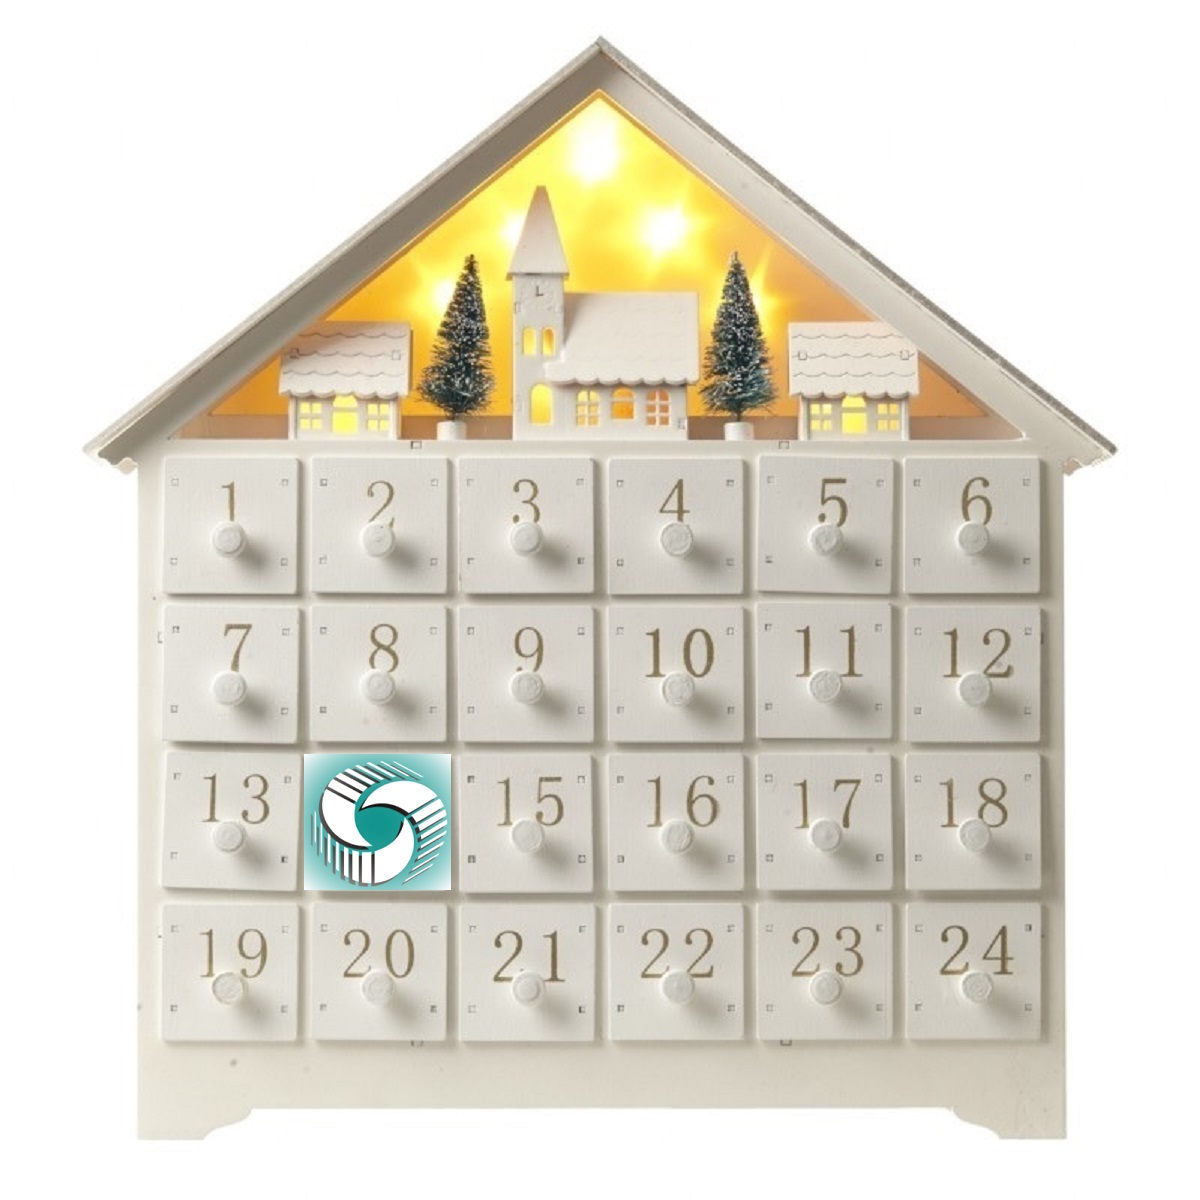 Day 14 – Frontier’s Advent Calendar